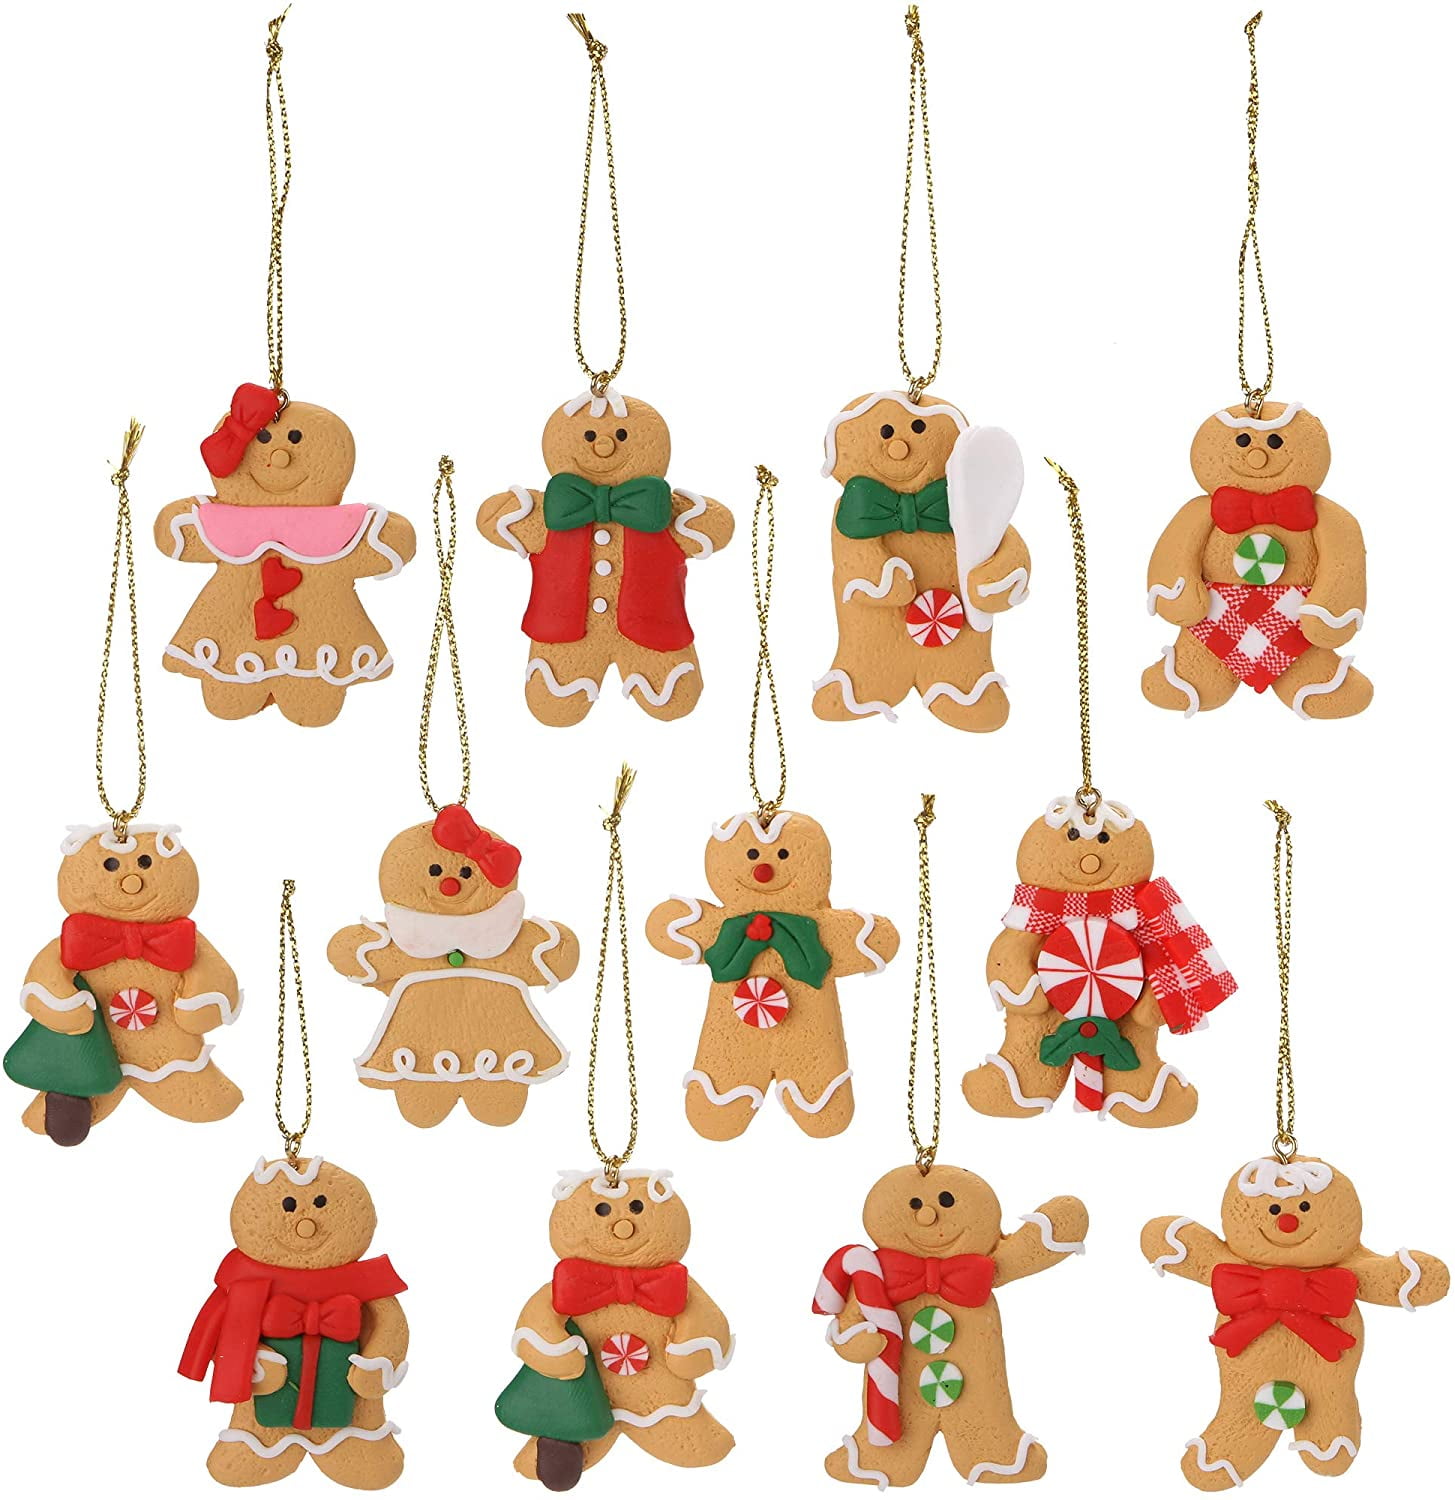 12 Pcs Gingerbread Man Christmas Ornaments 2020 Christmas Ornament 2.7 x 2 Inch Christmas Tree Ornaments for Holiday Celebrations Decorations.